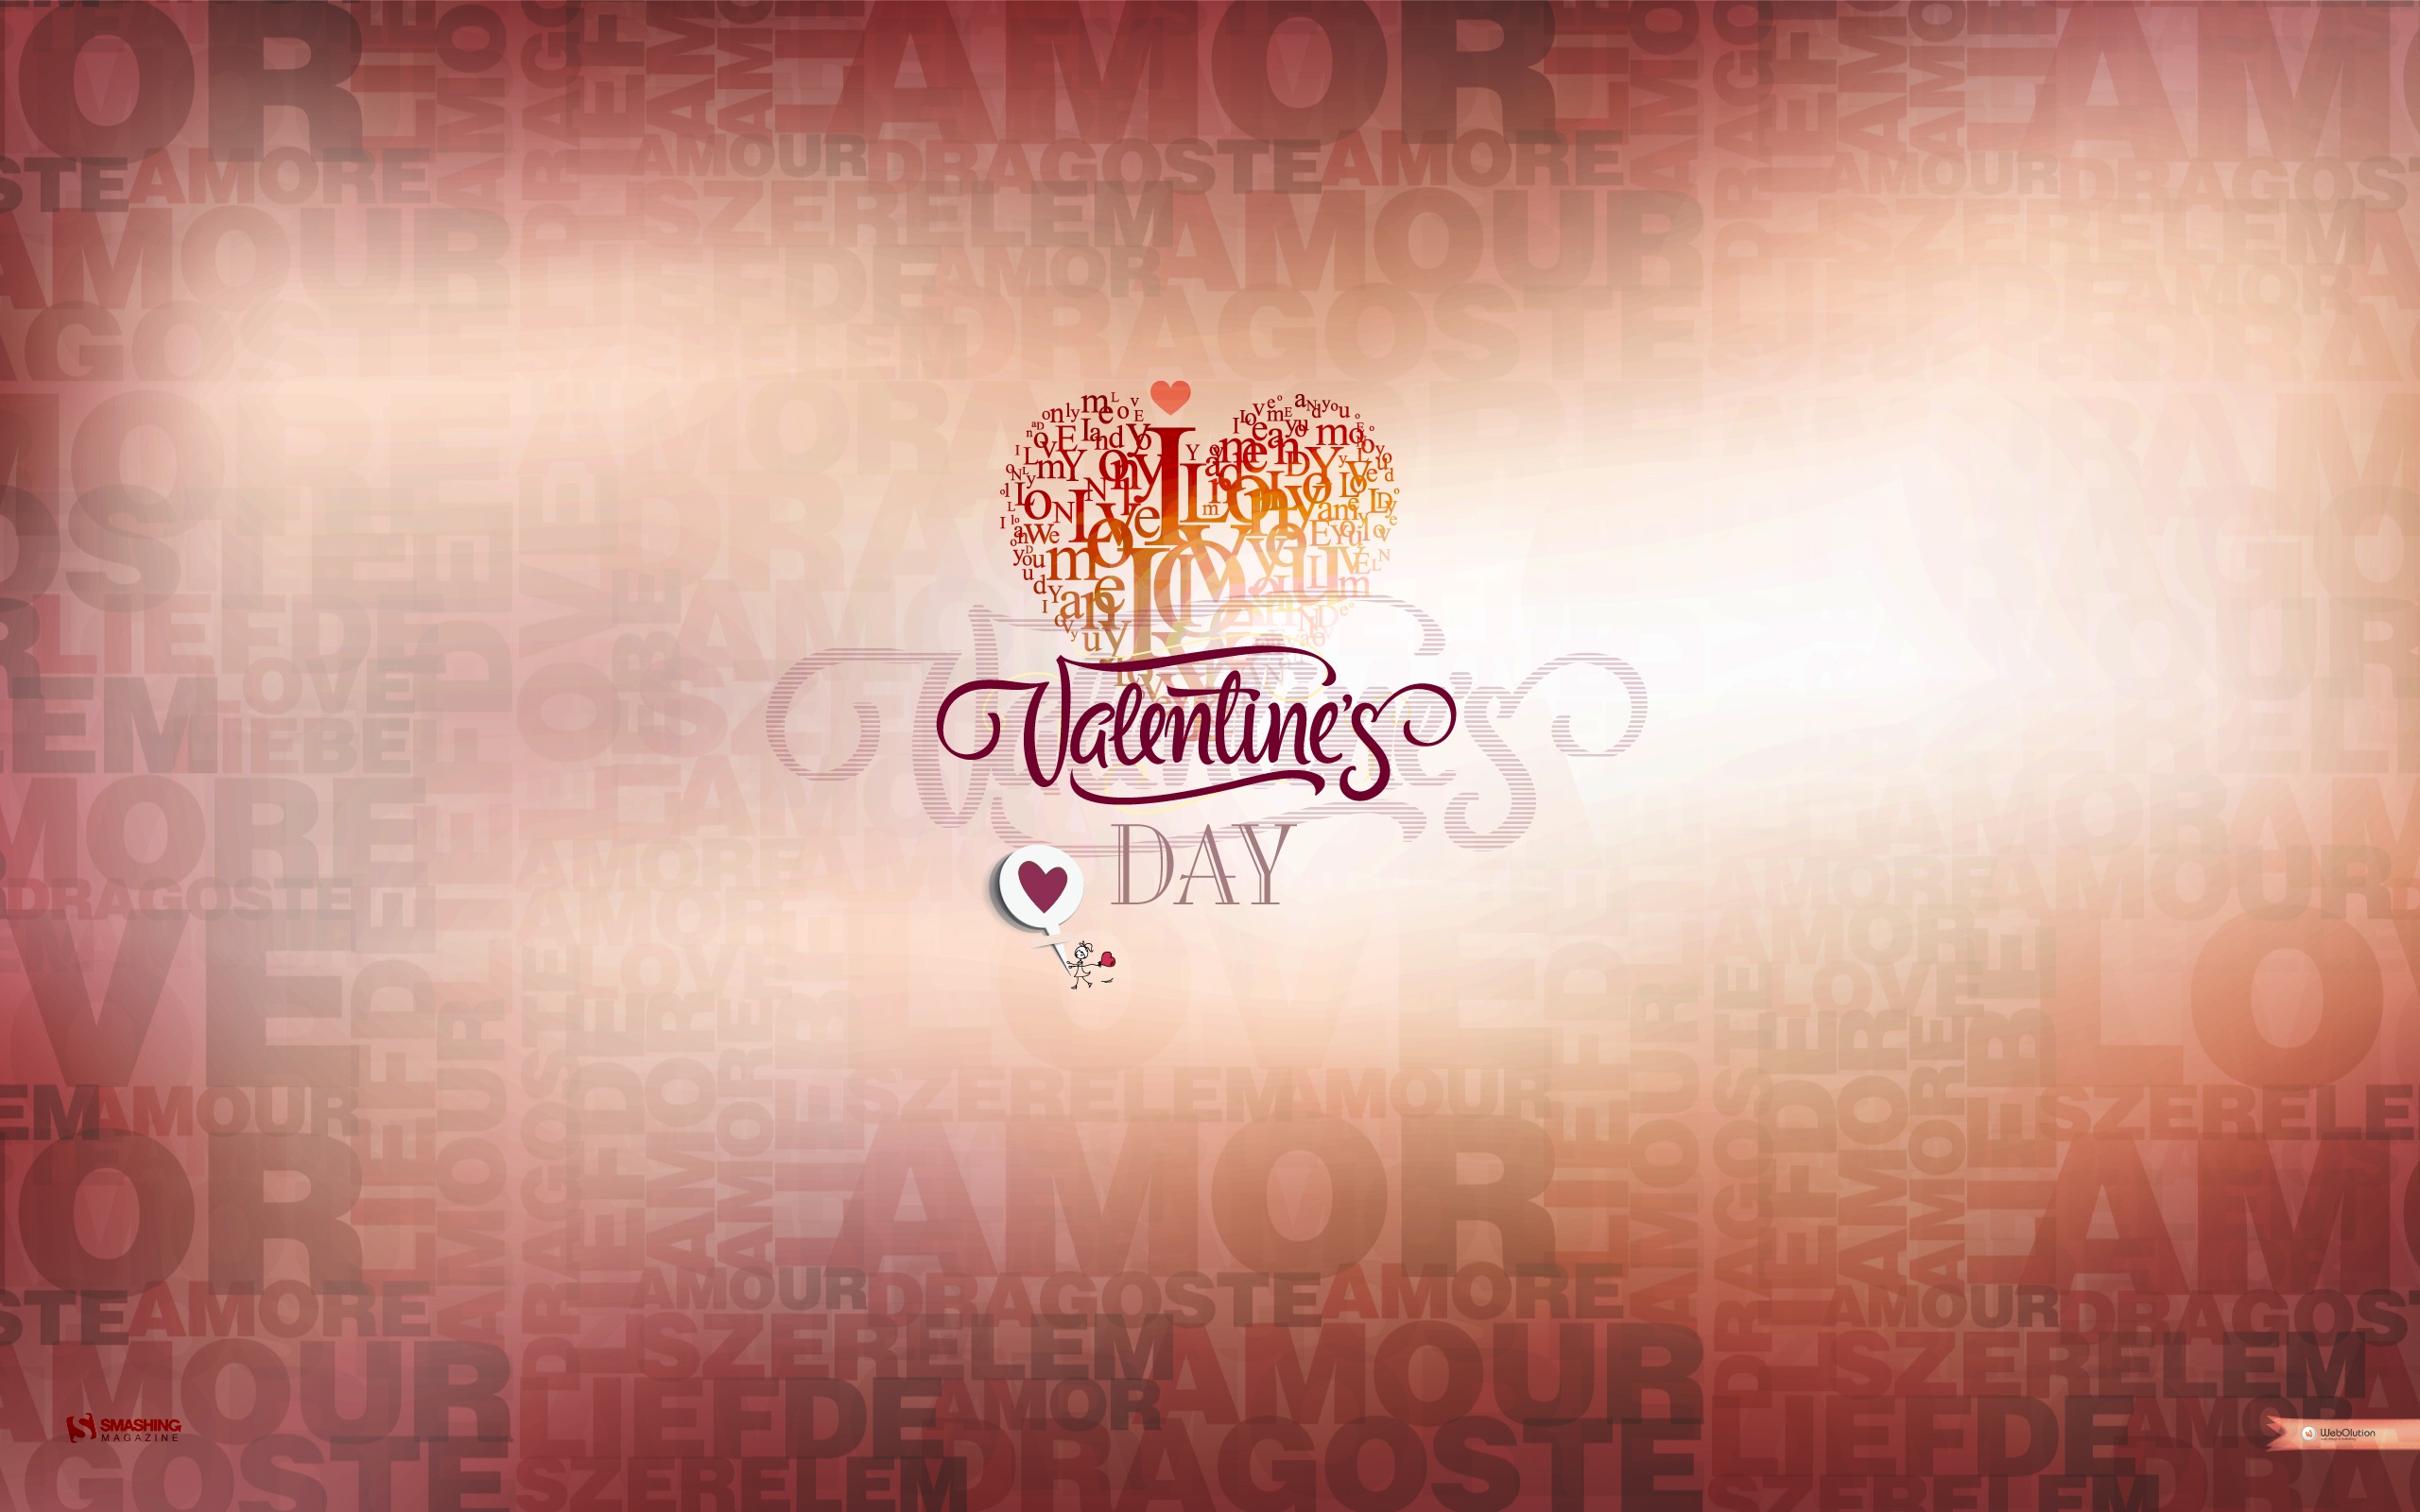 Feb 14 Valentines Day4363511499